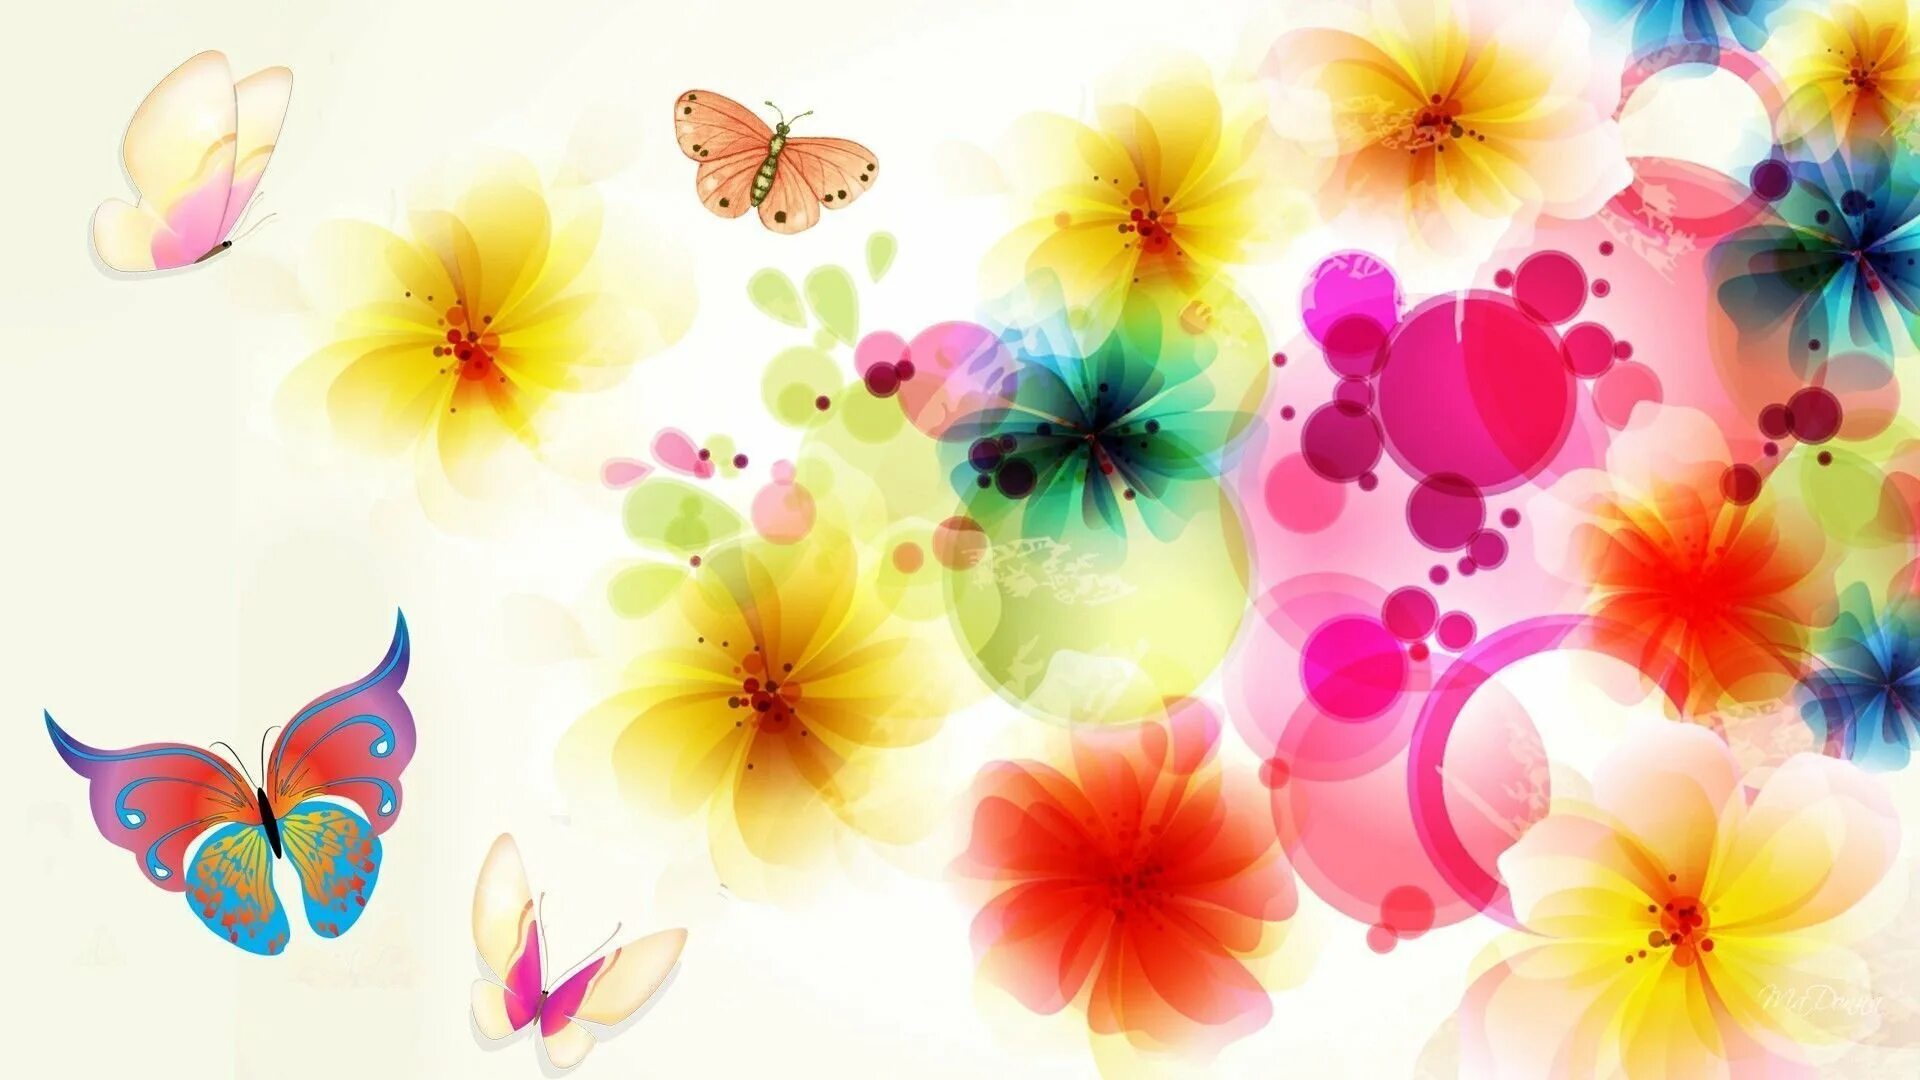 Фон красивый без фона. Яркий фон. Фон яркий красочный. Фон бабочки. Фон с цветами и бабочками.